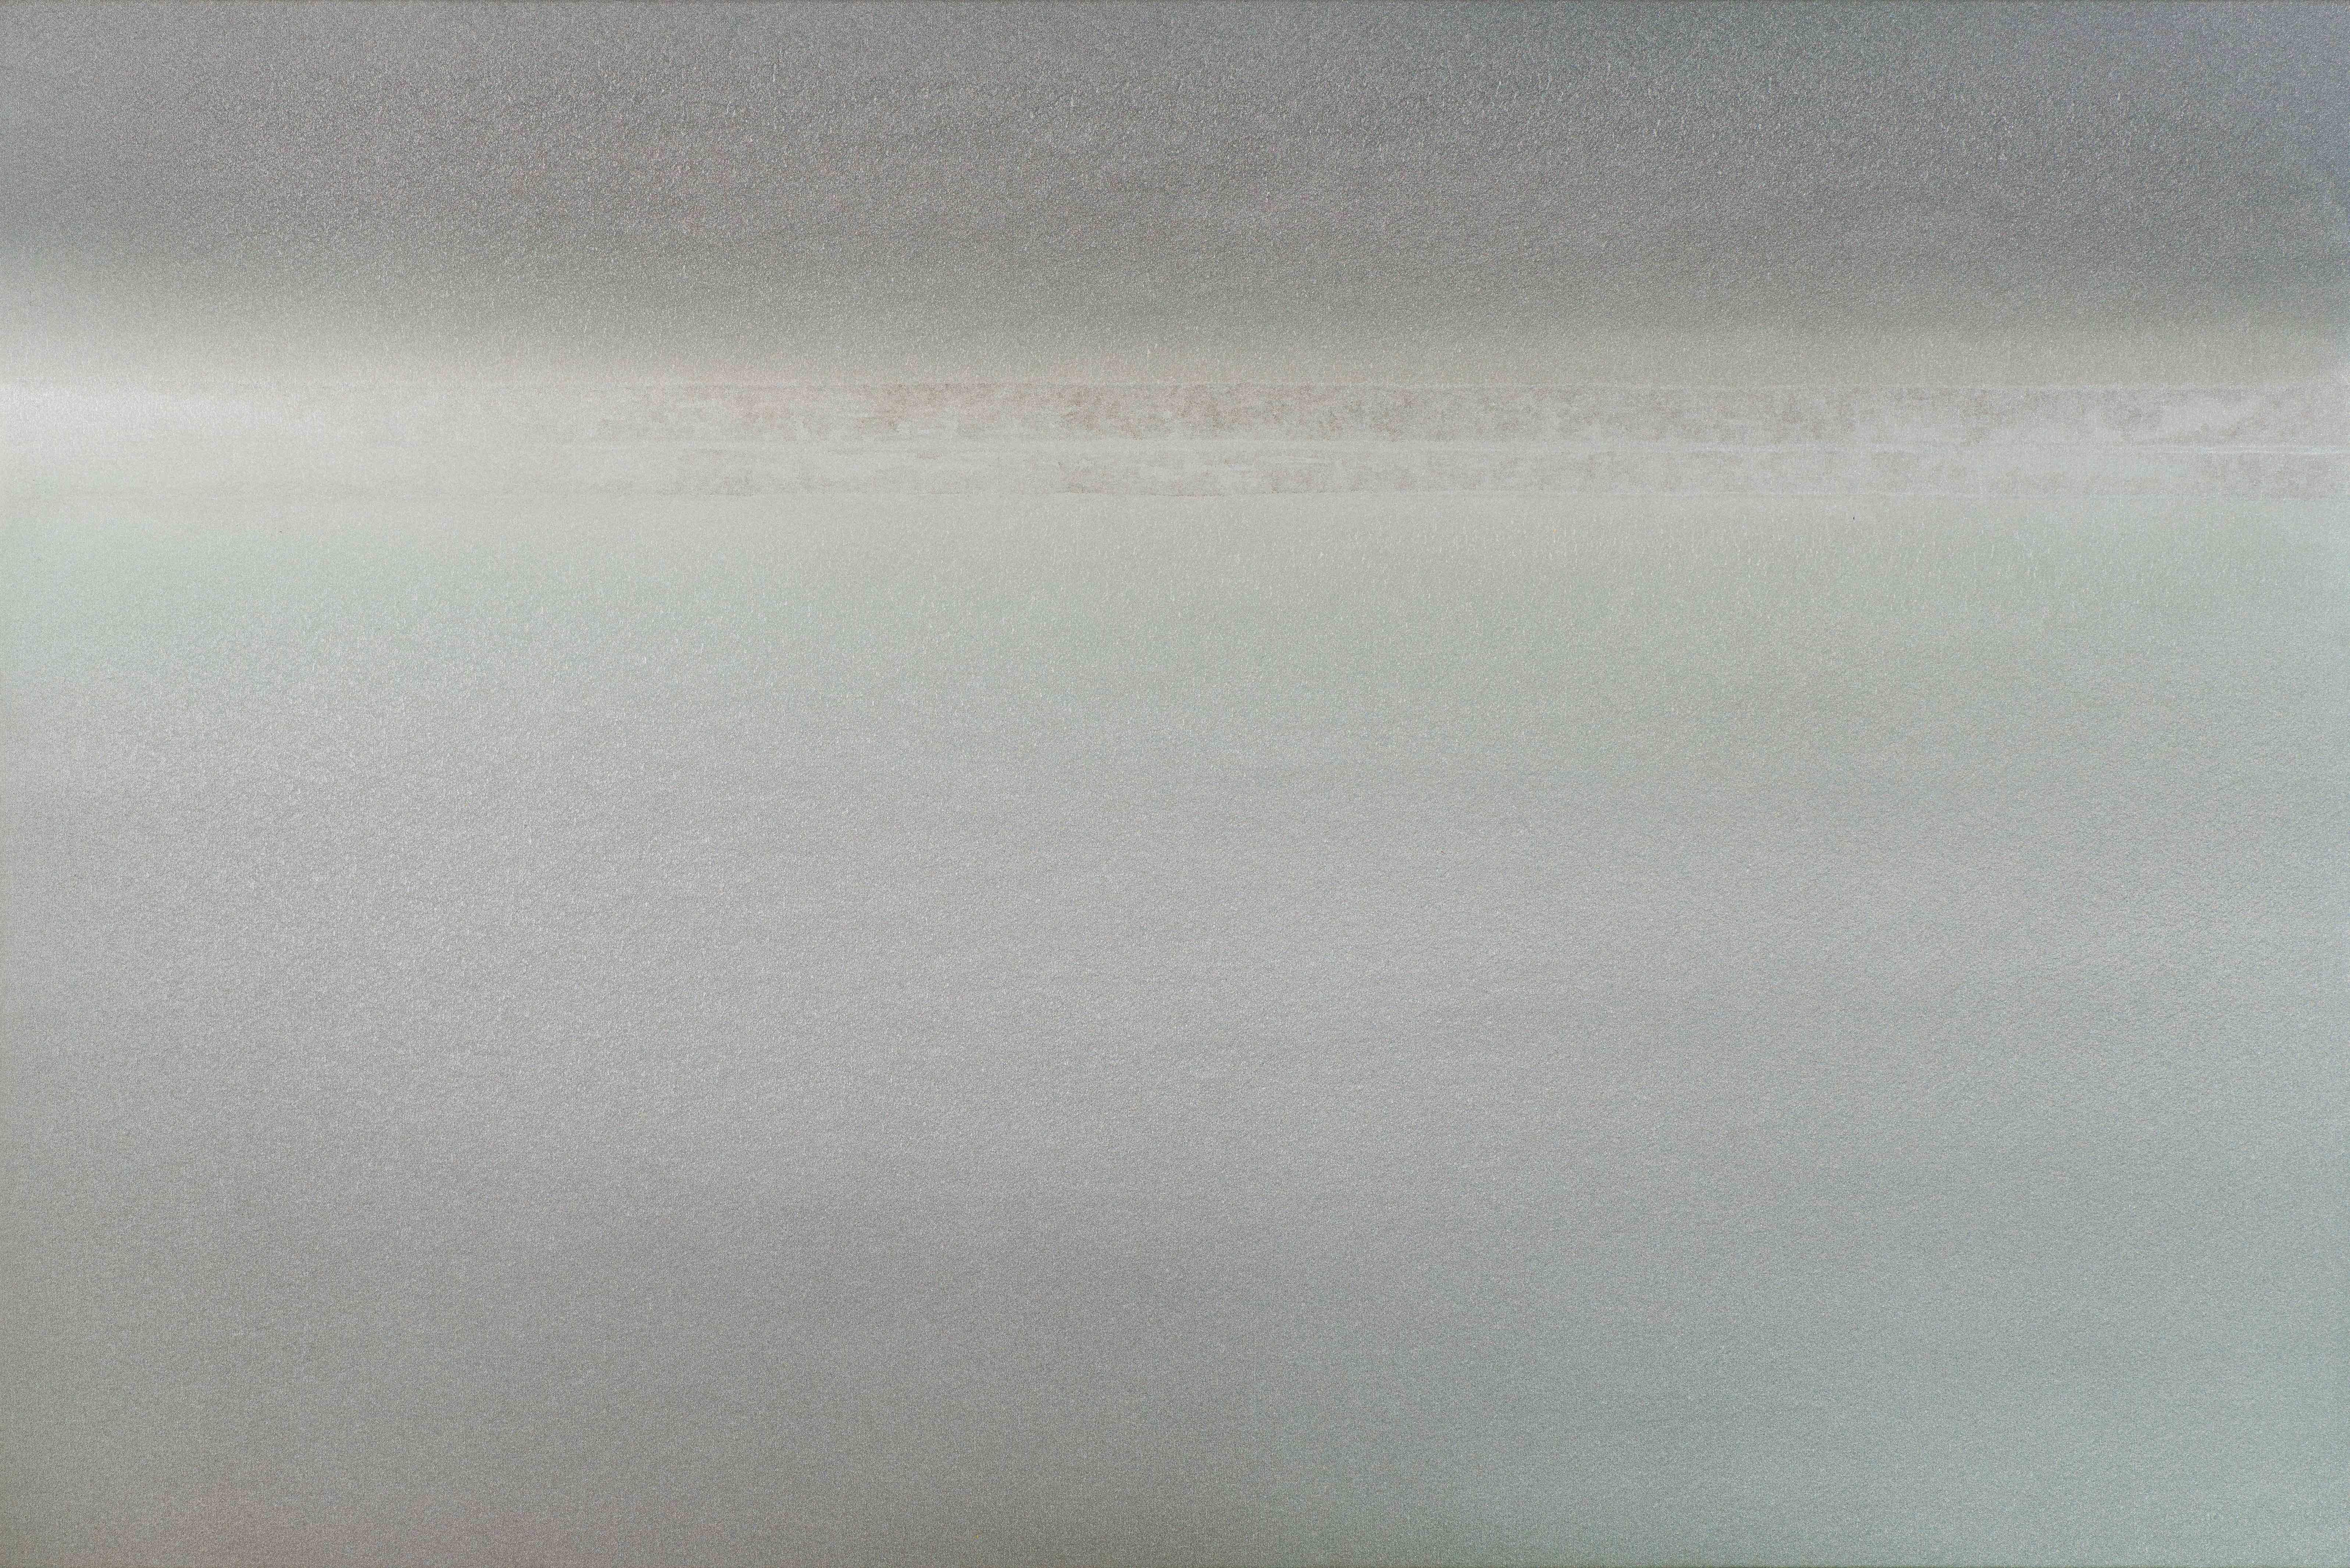 Mala Breuer Abstract Painting - 1975 (6)